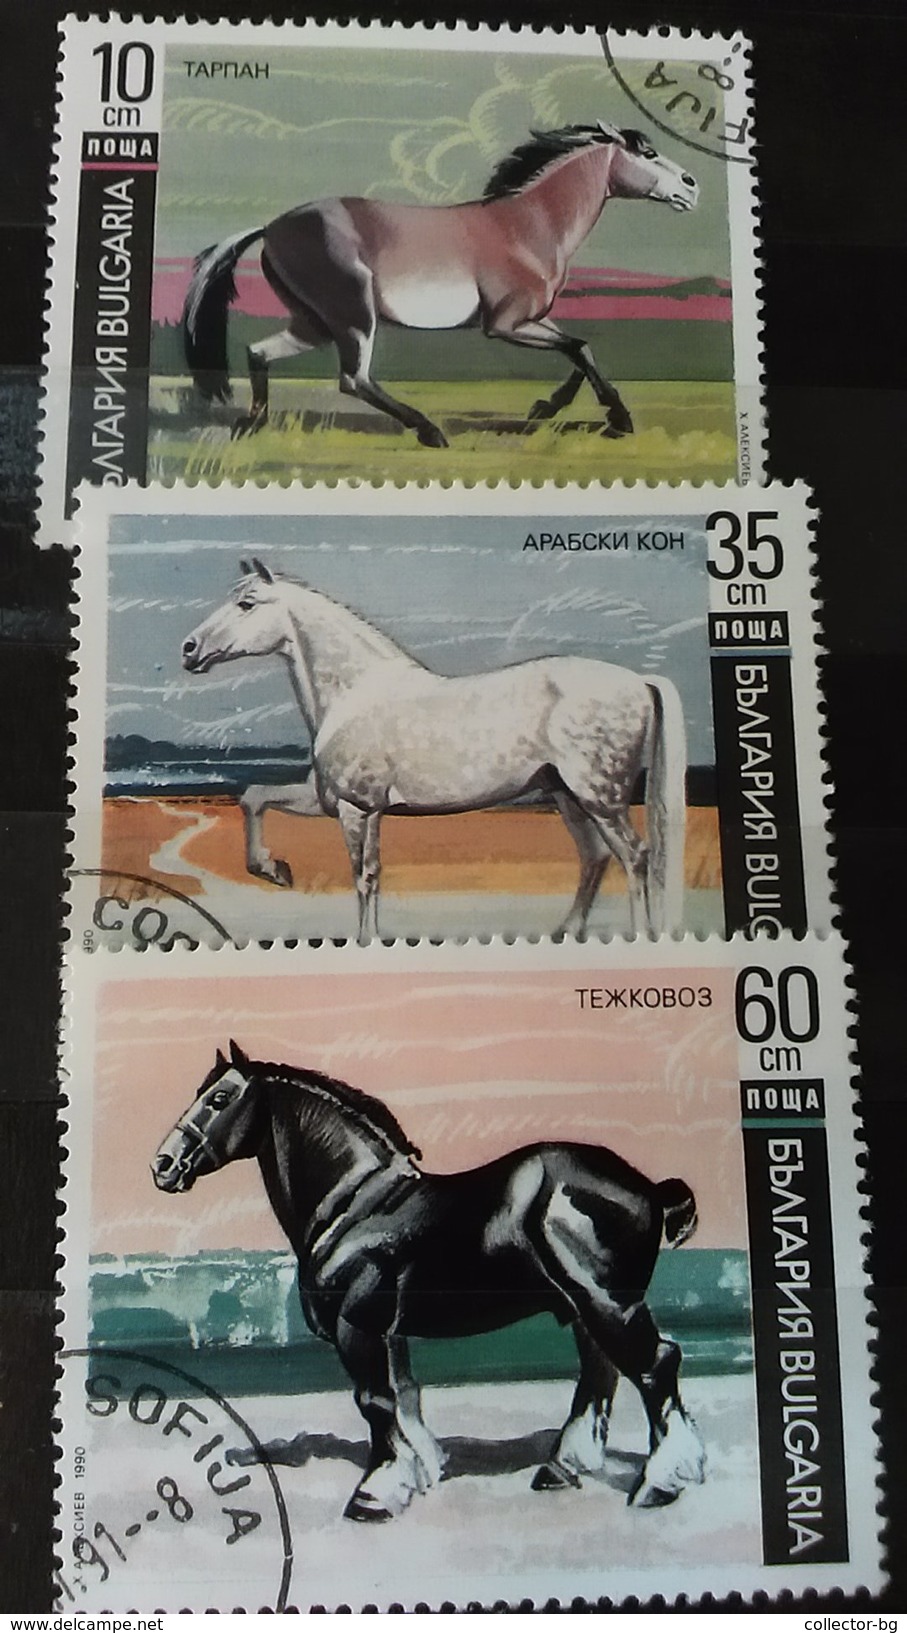 Unused stamps - RARE SET LOT 5+10+25+35+42+60 STOTINKI BULGARIA HORSE ANIMAL  STAMP TIMBRE